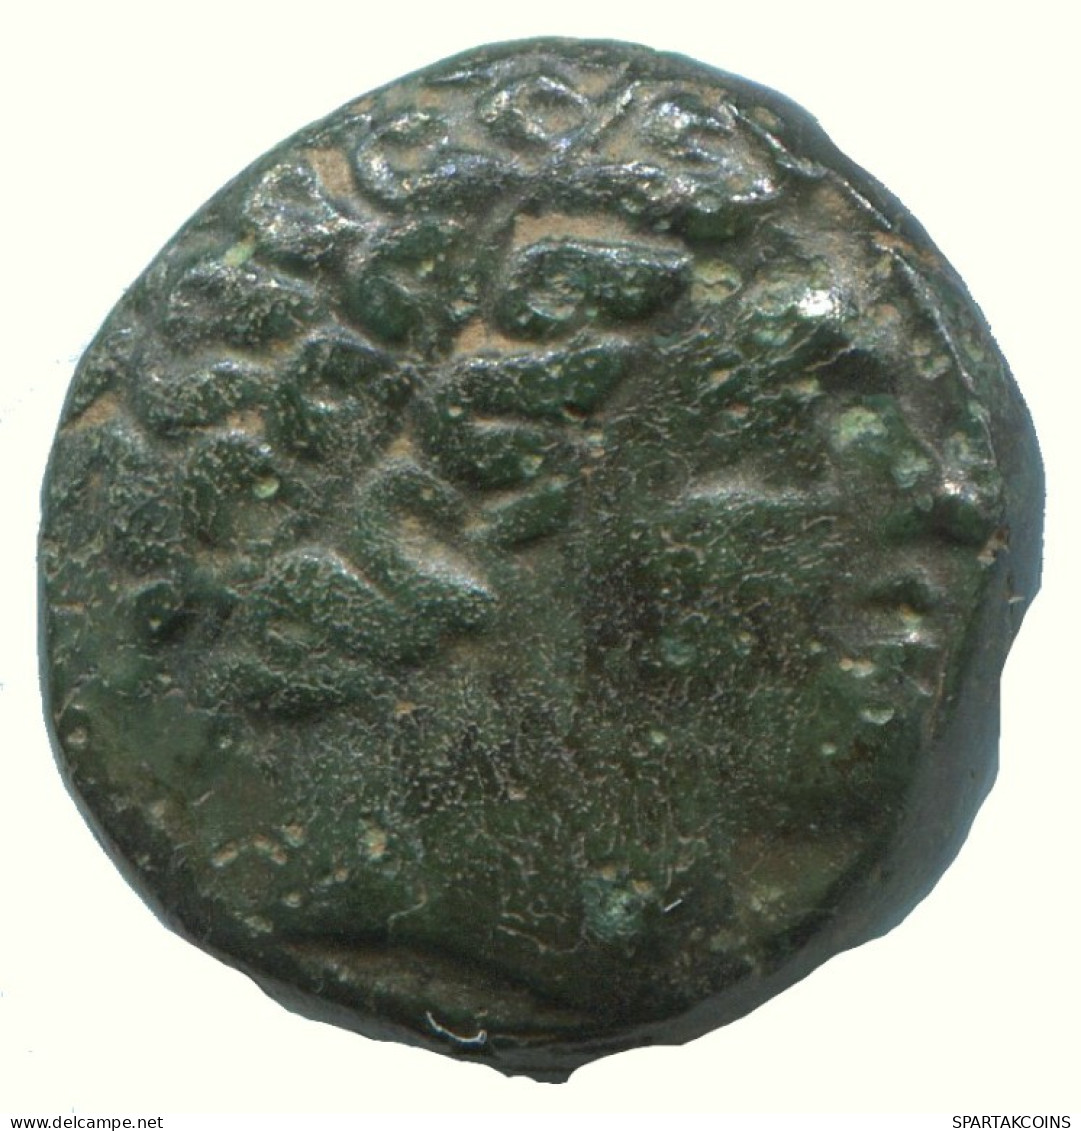 MACEDONIAN KINGDOM PHILIP II 359-336 BC APOLLO HORSEMAN 6.1g/17mm #AA010.58.U.A - Grecques